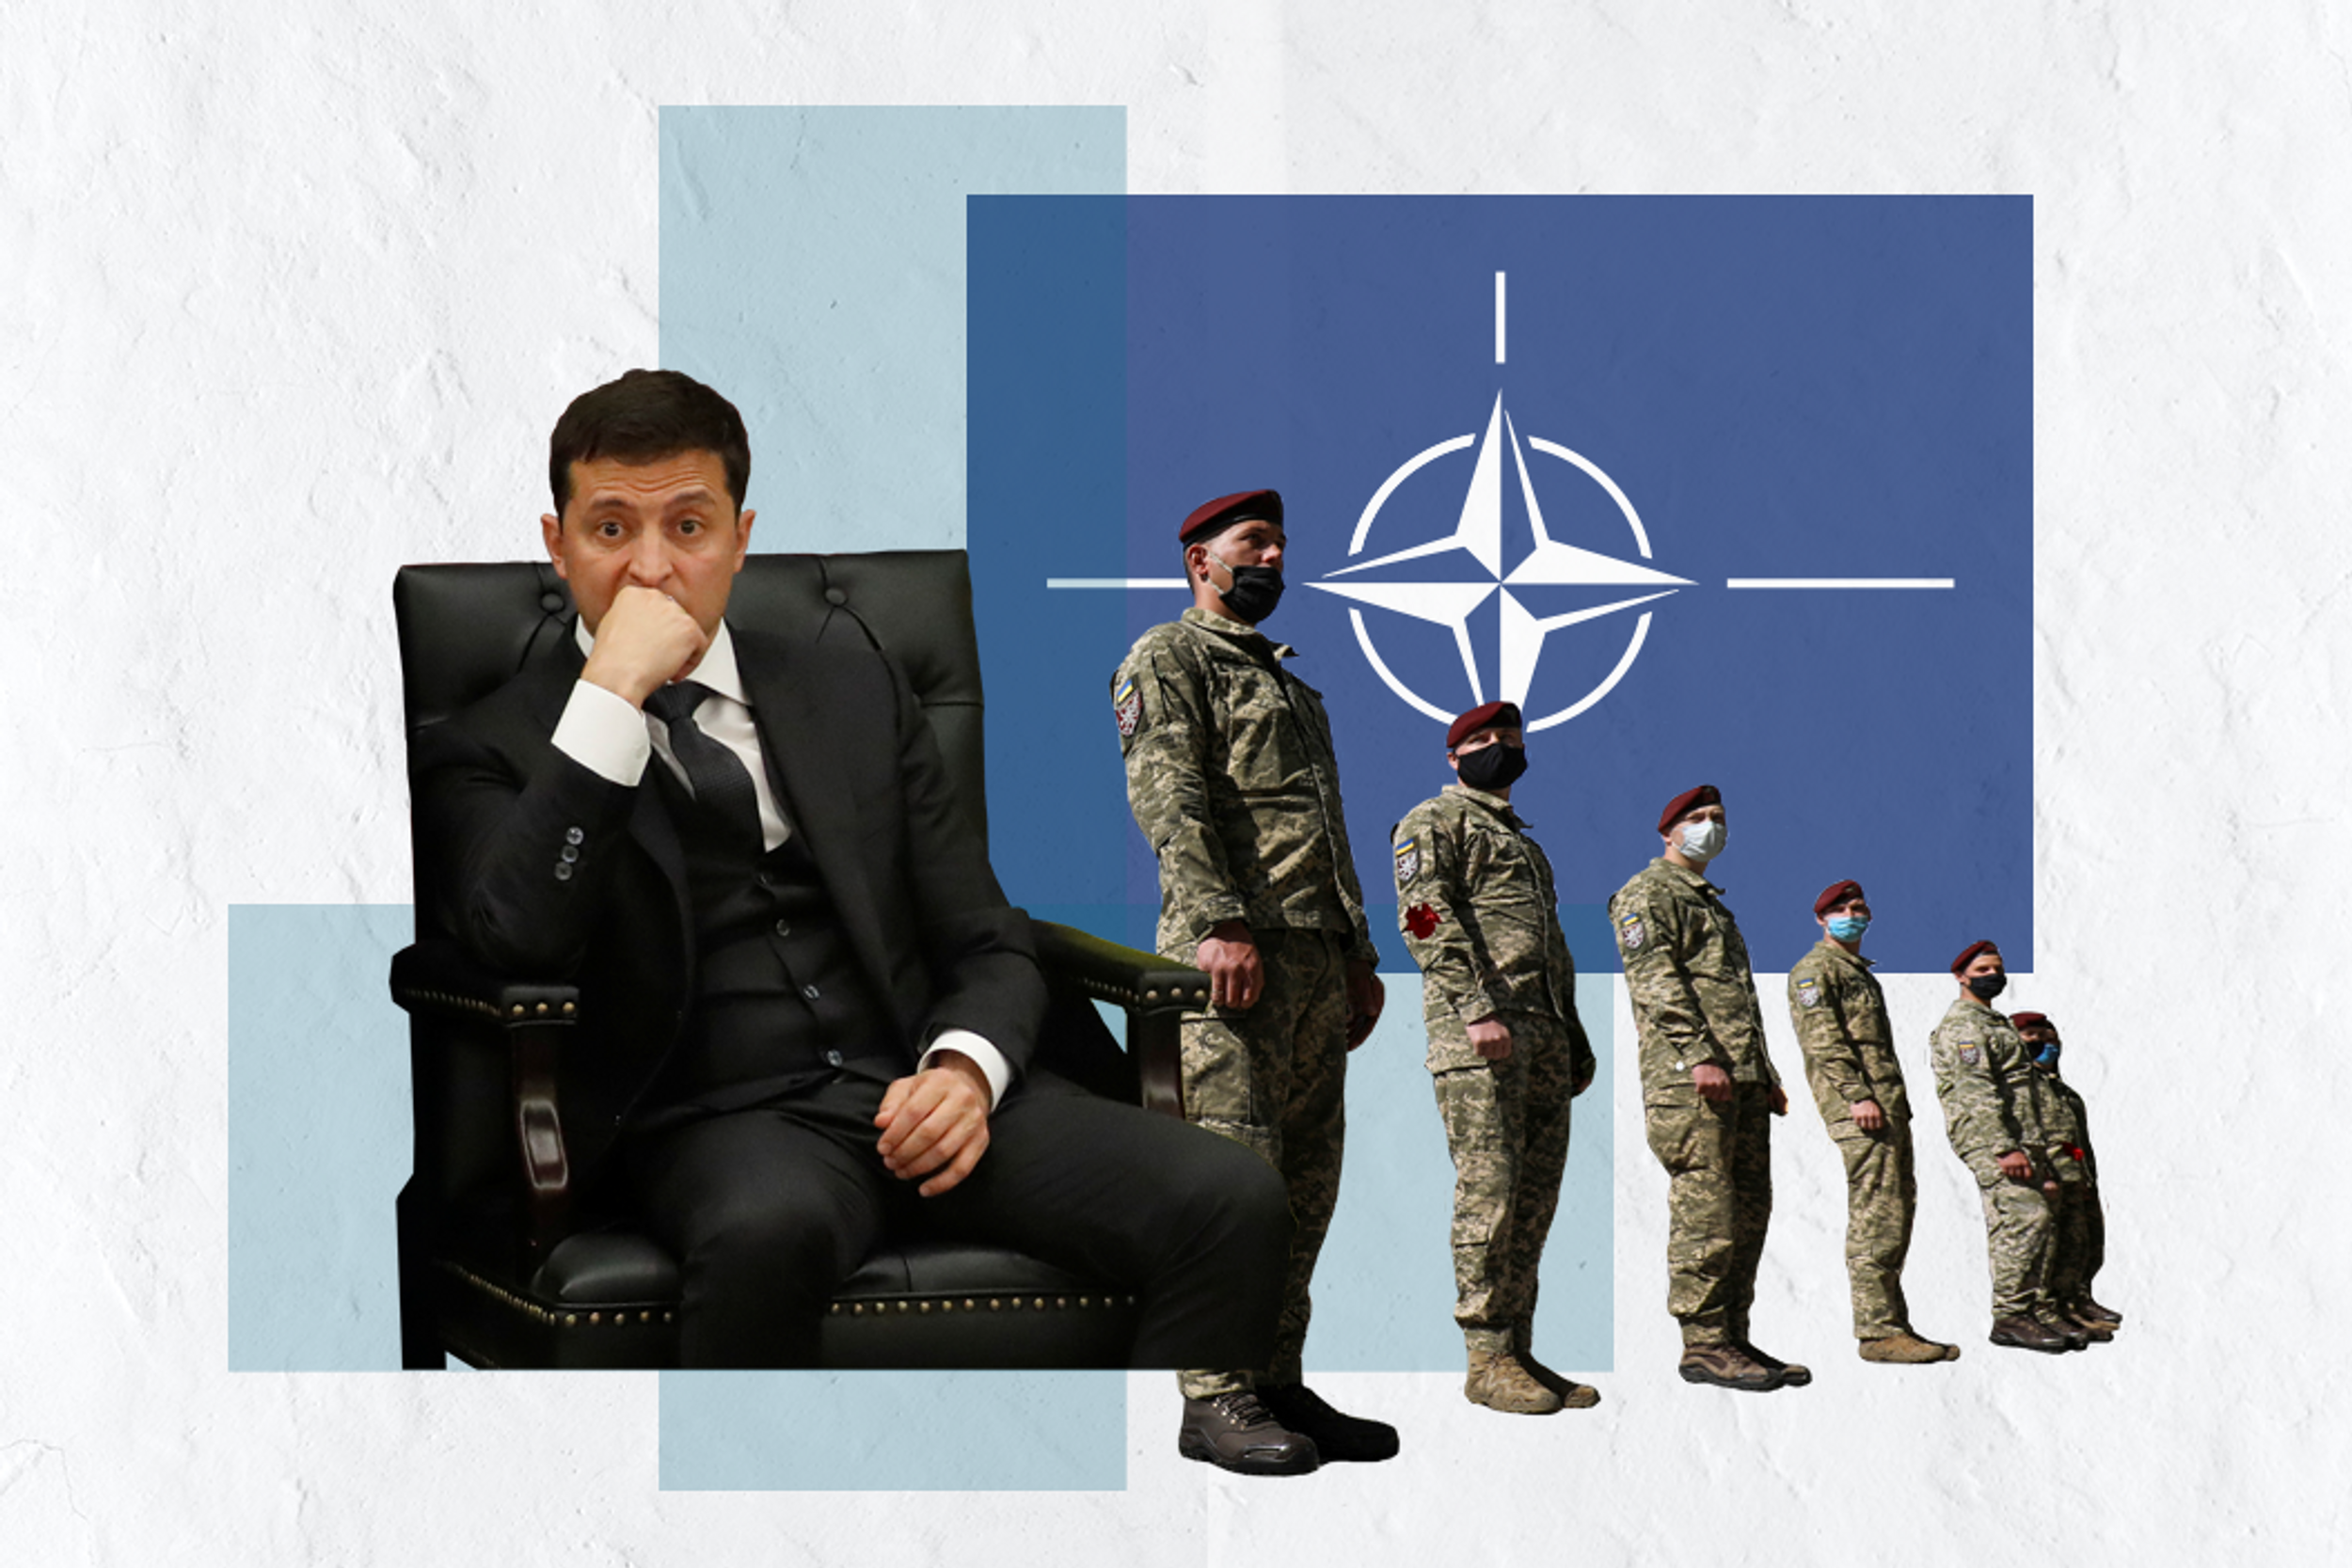 Should NATO embrace Ukraine?